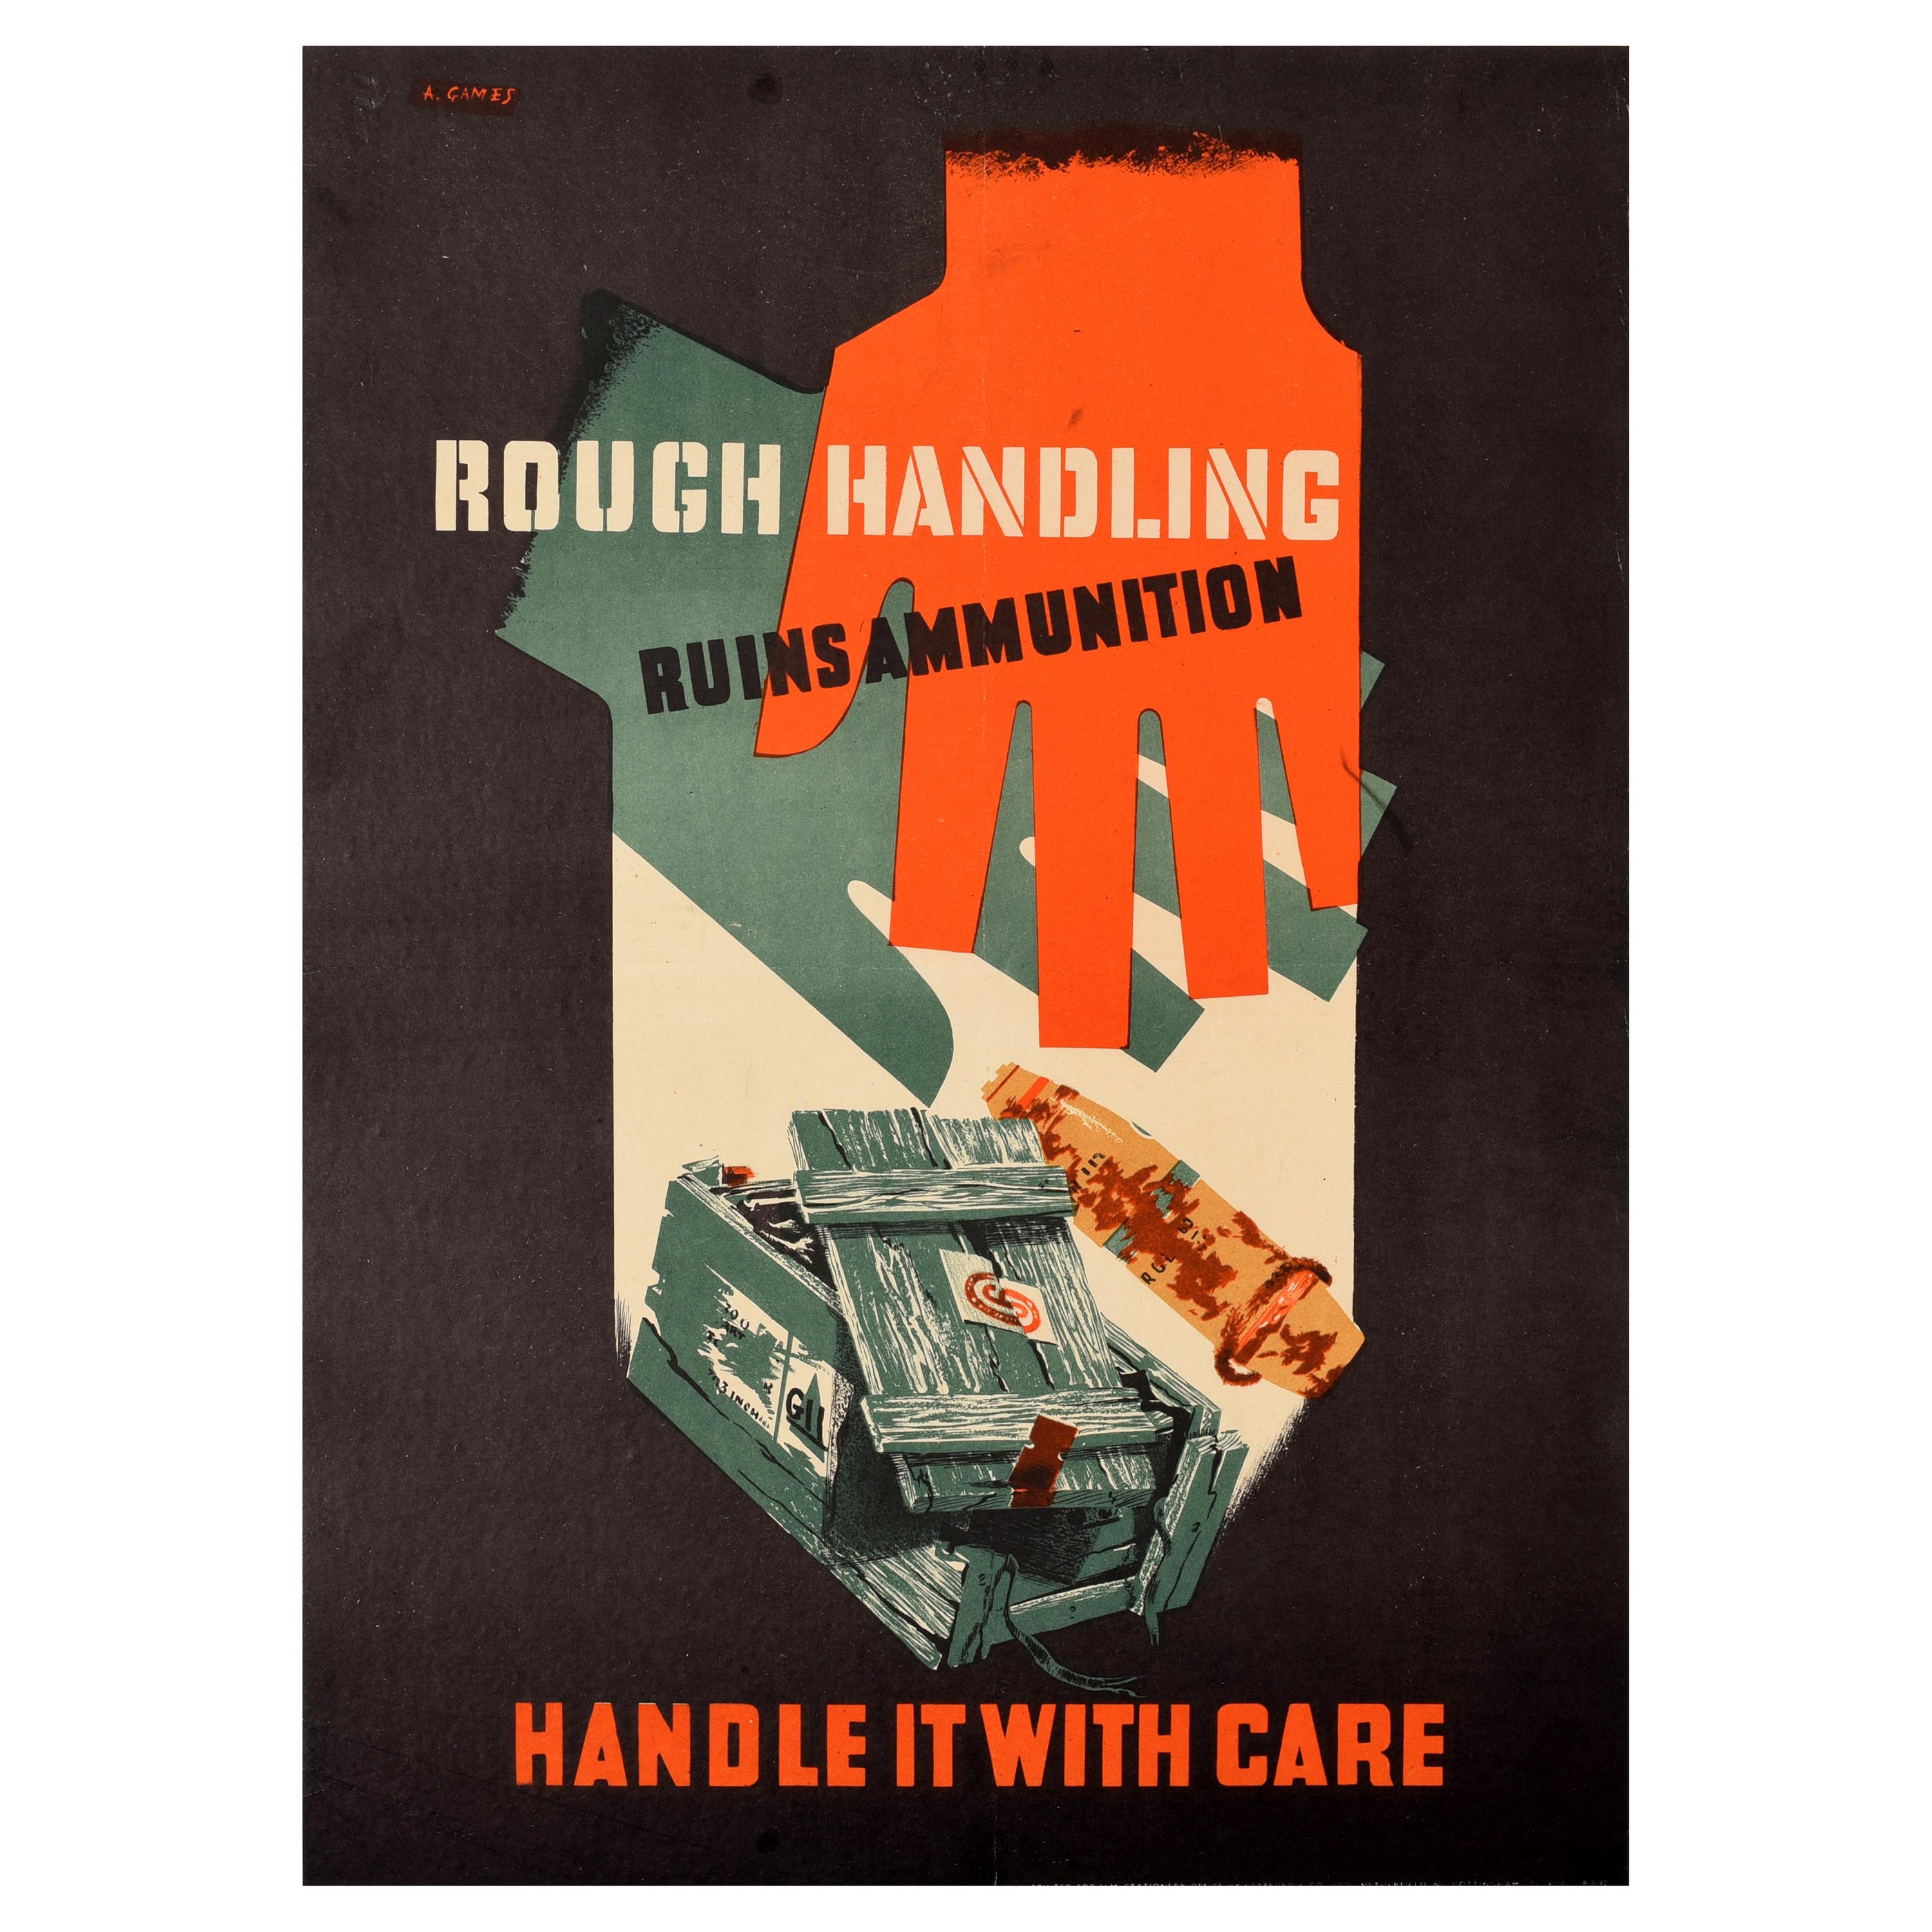 Original-Vintage-Poster, WWII, „Rough handling Ruins Ammunition Safety Care Warning“, Warnung im Angebot